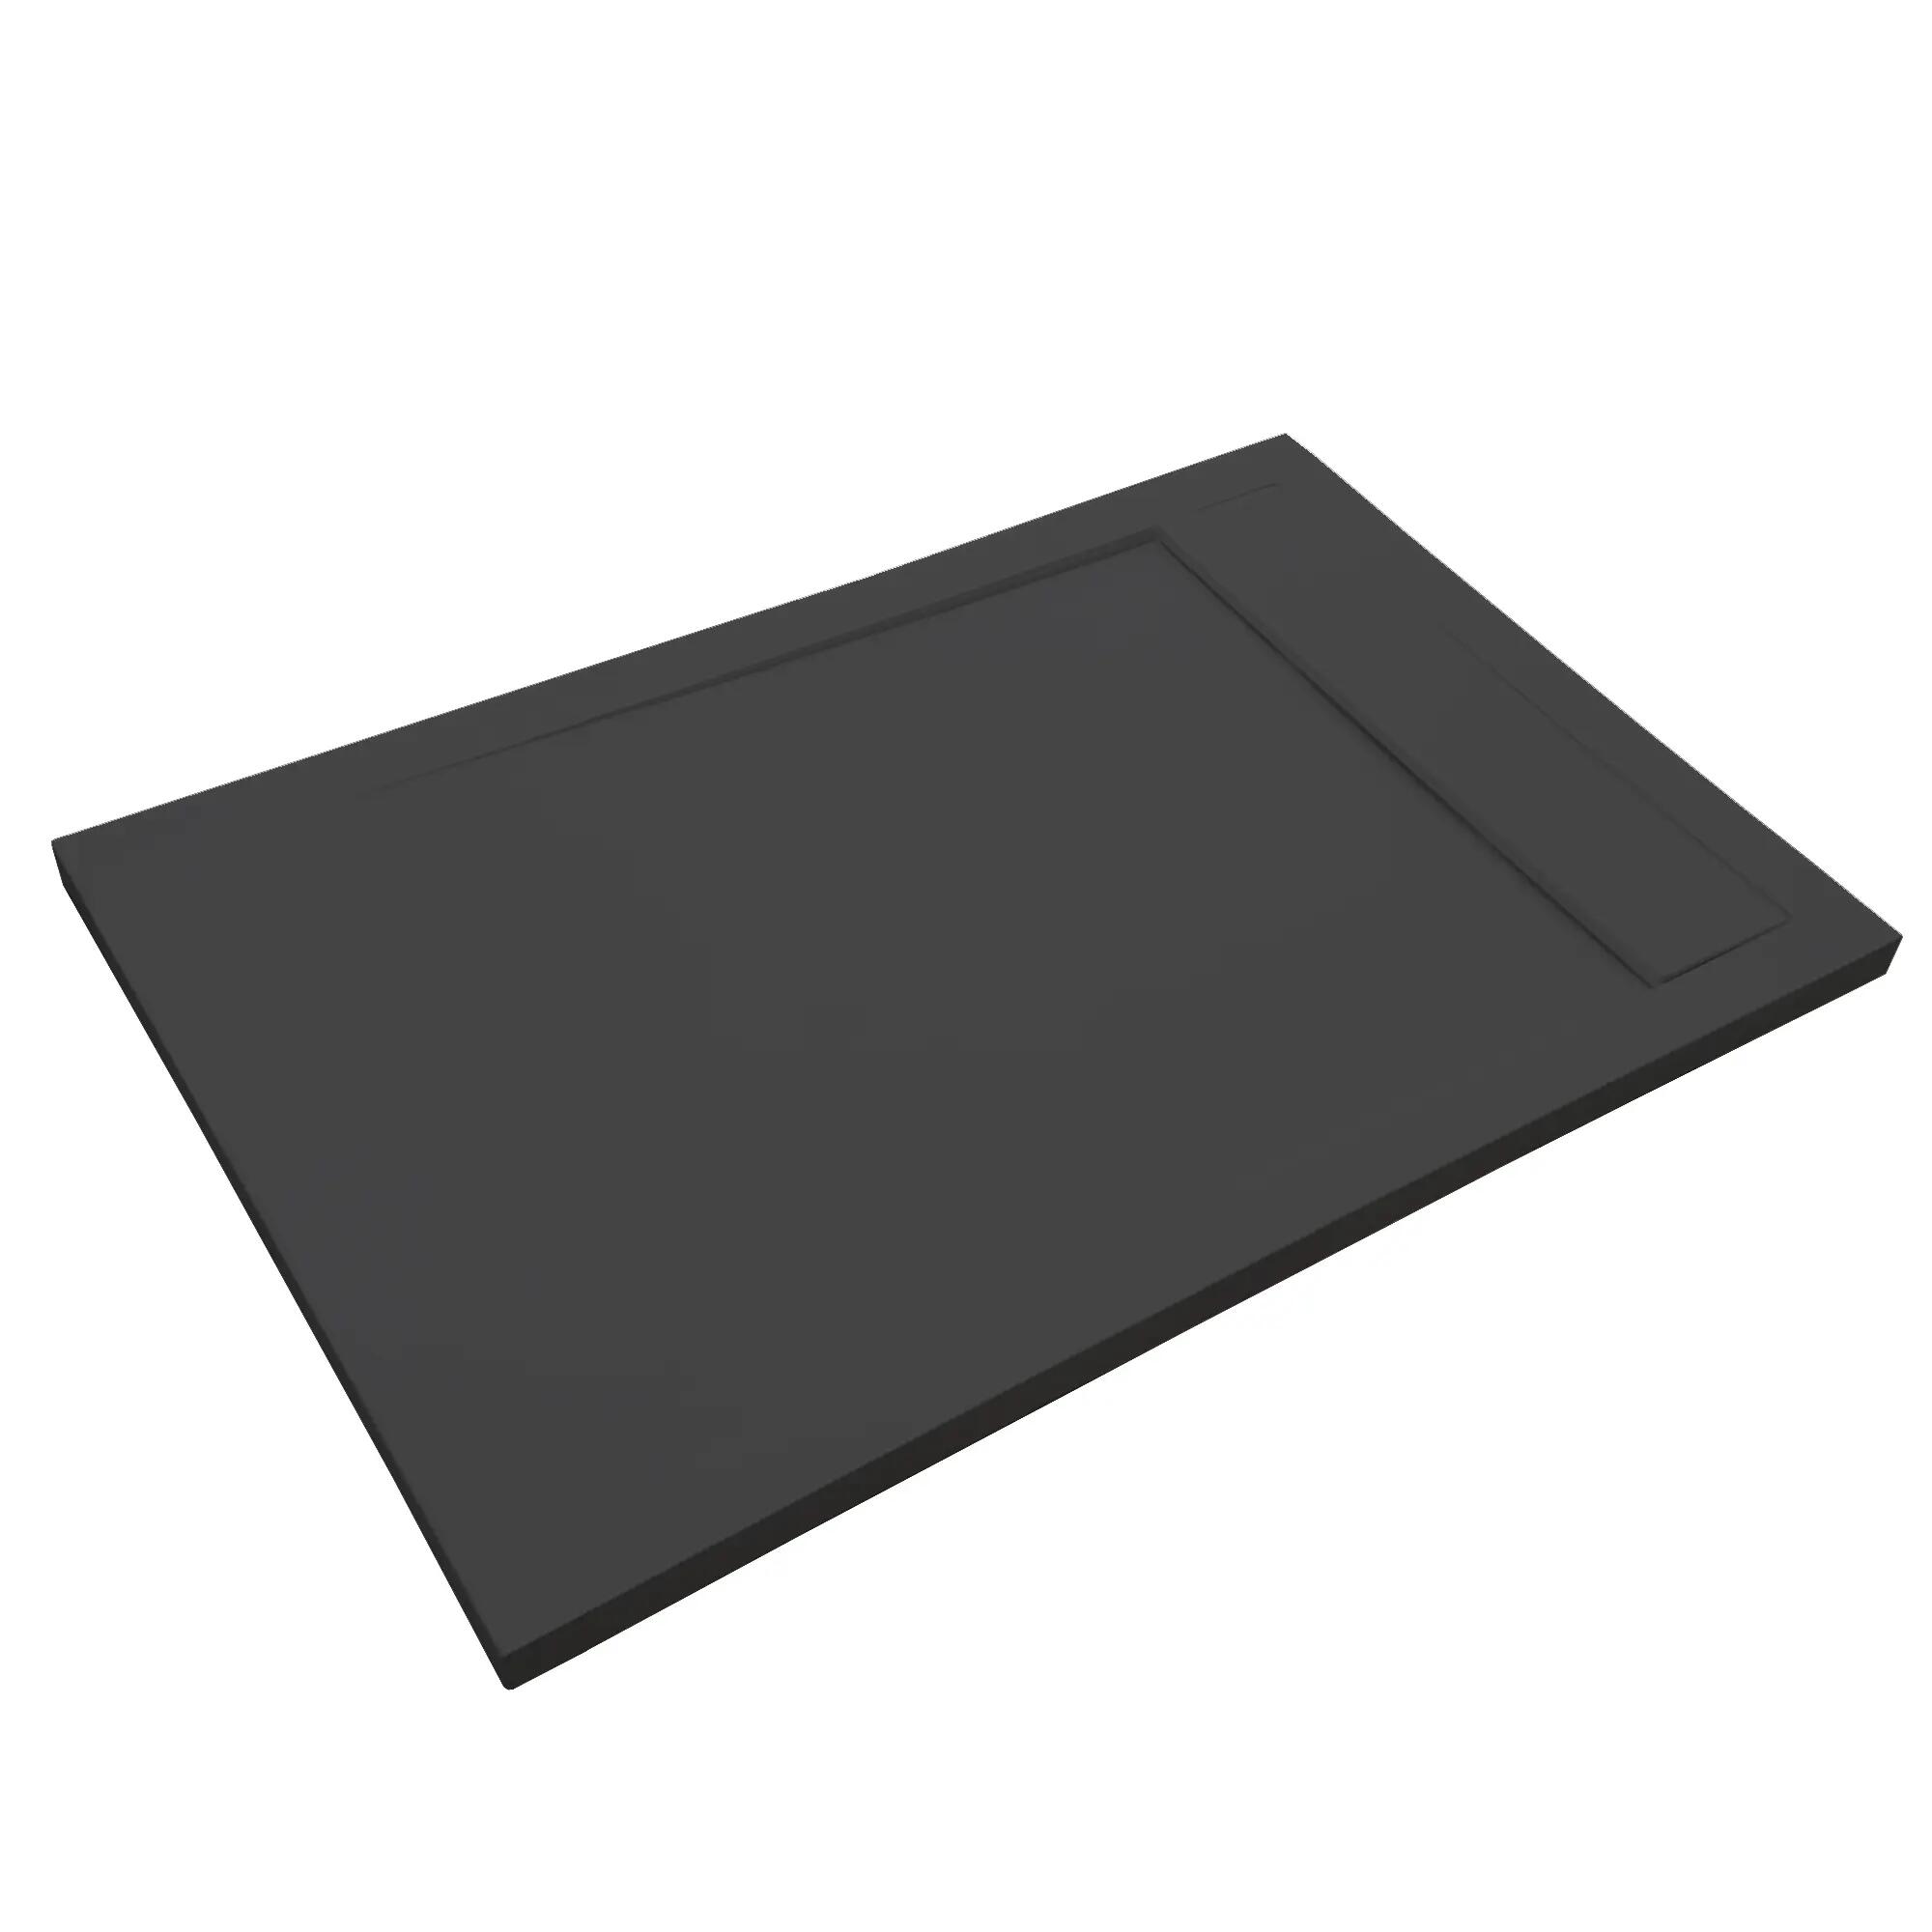 Plato de ducha new york 100x70 cm negro